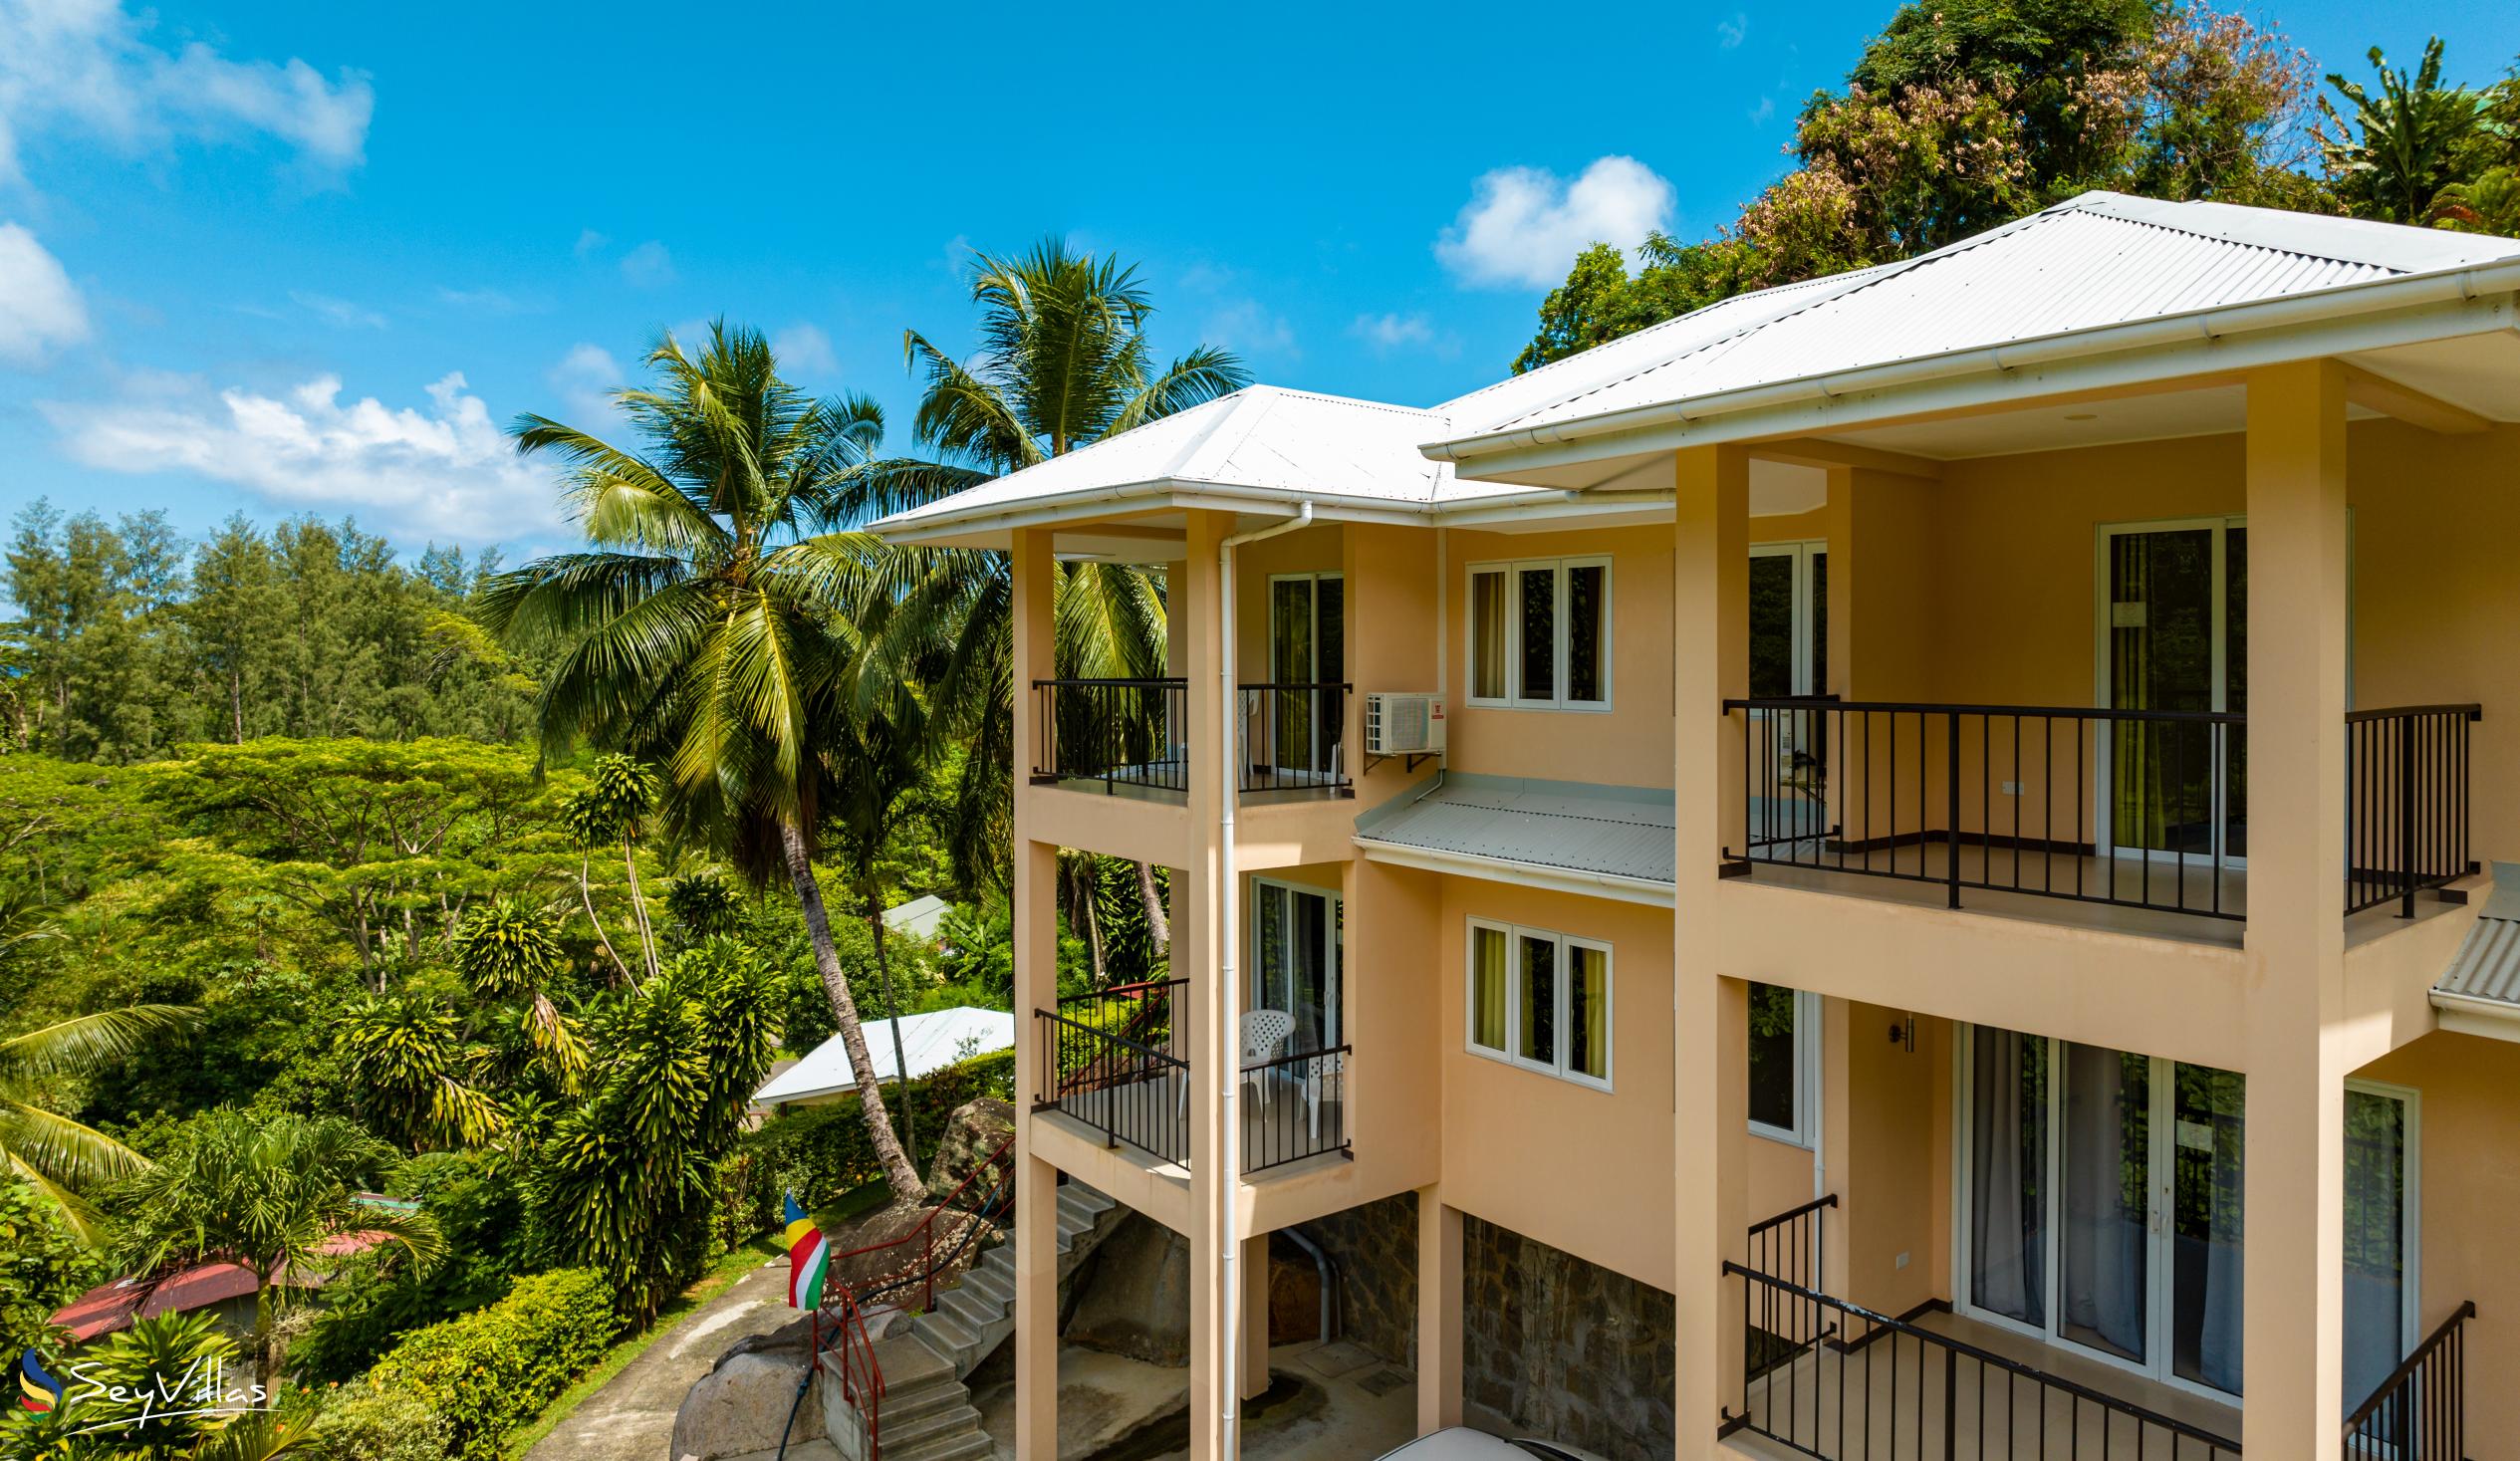 Foto 3: JAIDSS Holiday Apartments - Aussenbereich - Mahé (Seychellen)